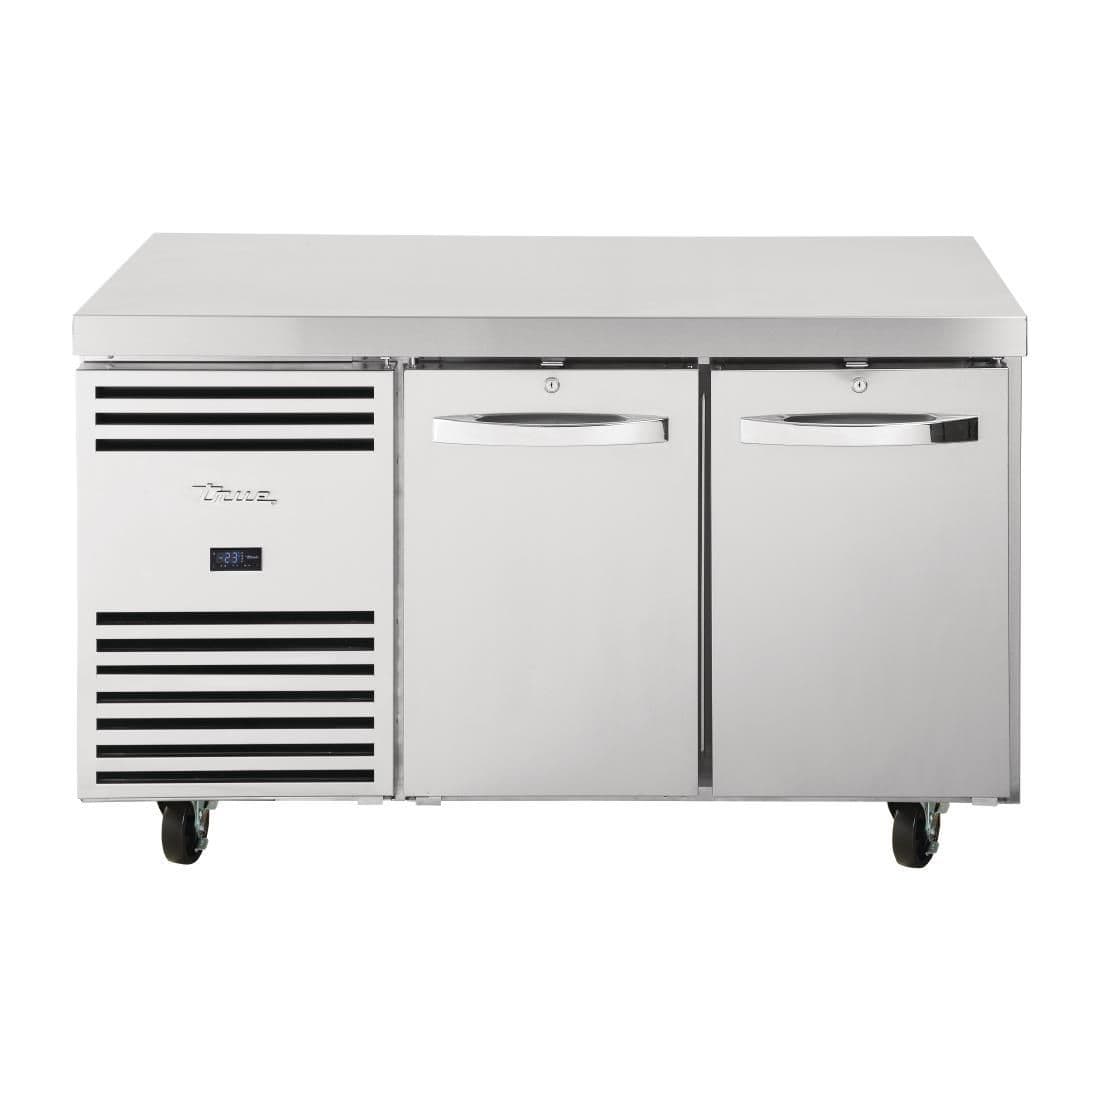 FA035 True Double Door 1/1 GN Counter Freezer TCF1/2-CL-SS-DL-DR JD Catering Equipment Solutions Ltd